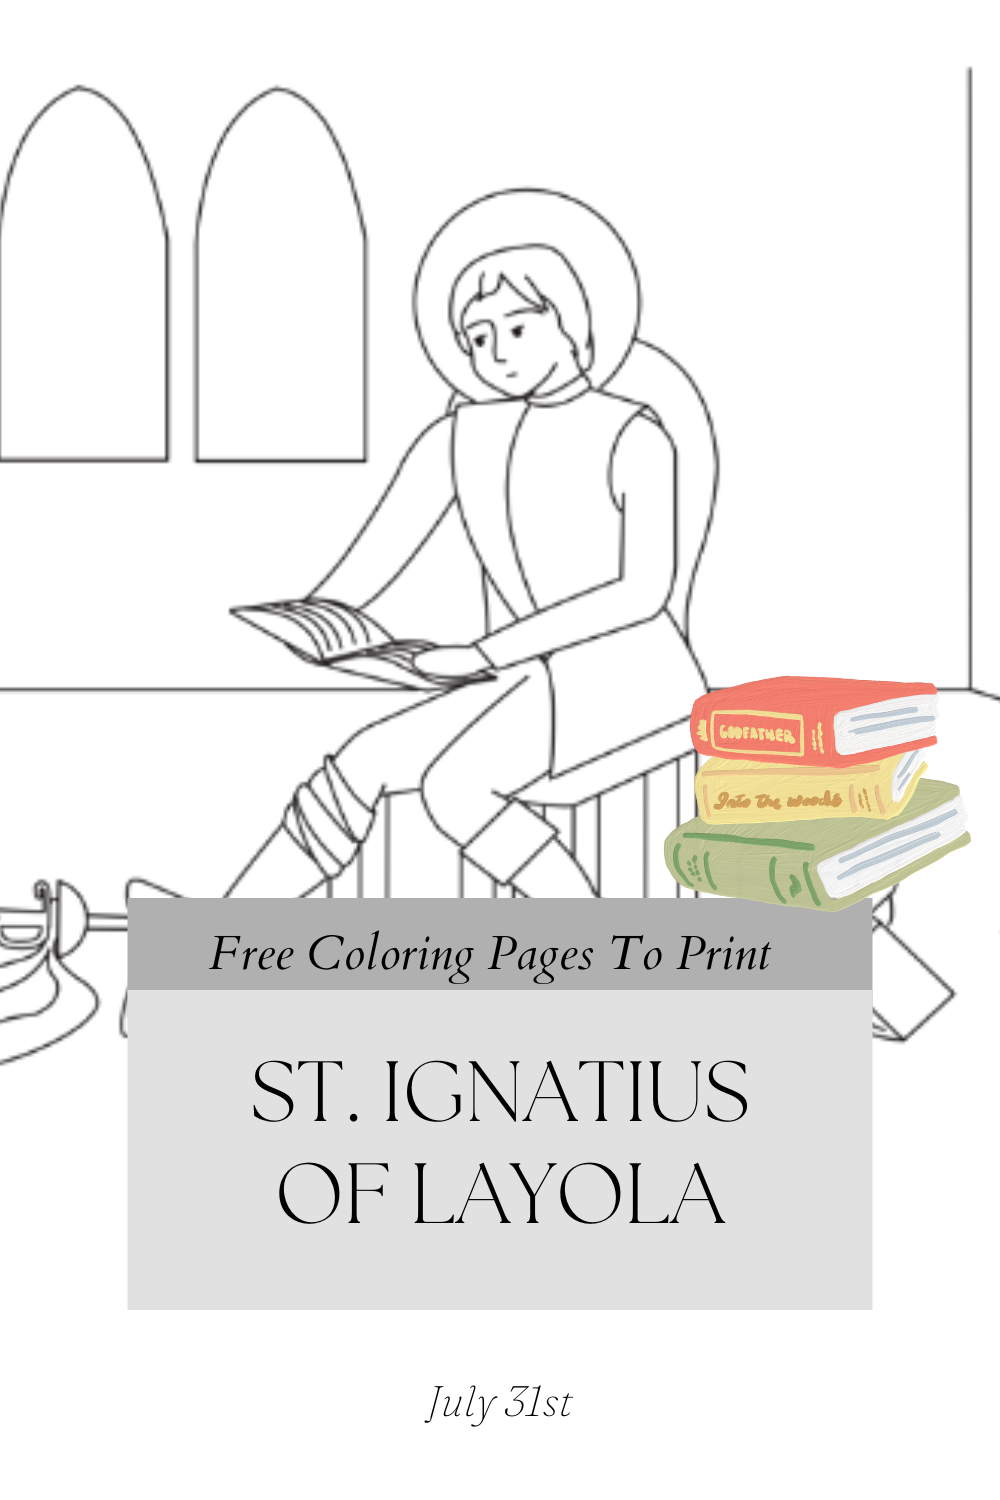 St Ignatius of layola coloring page blog image